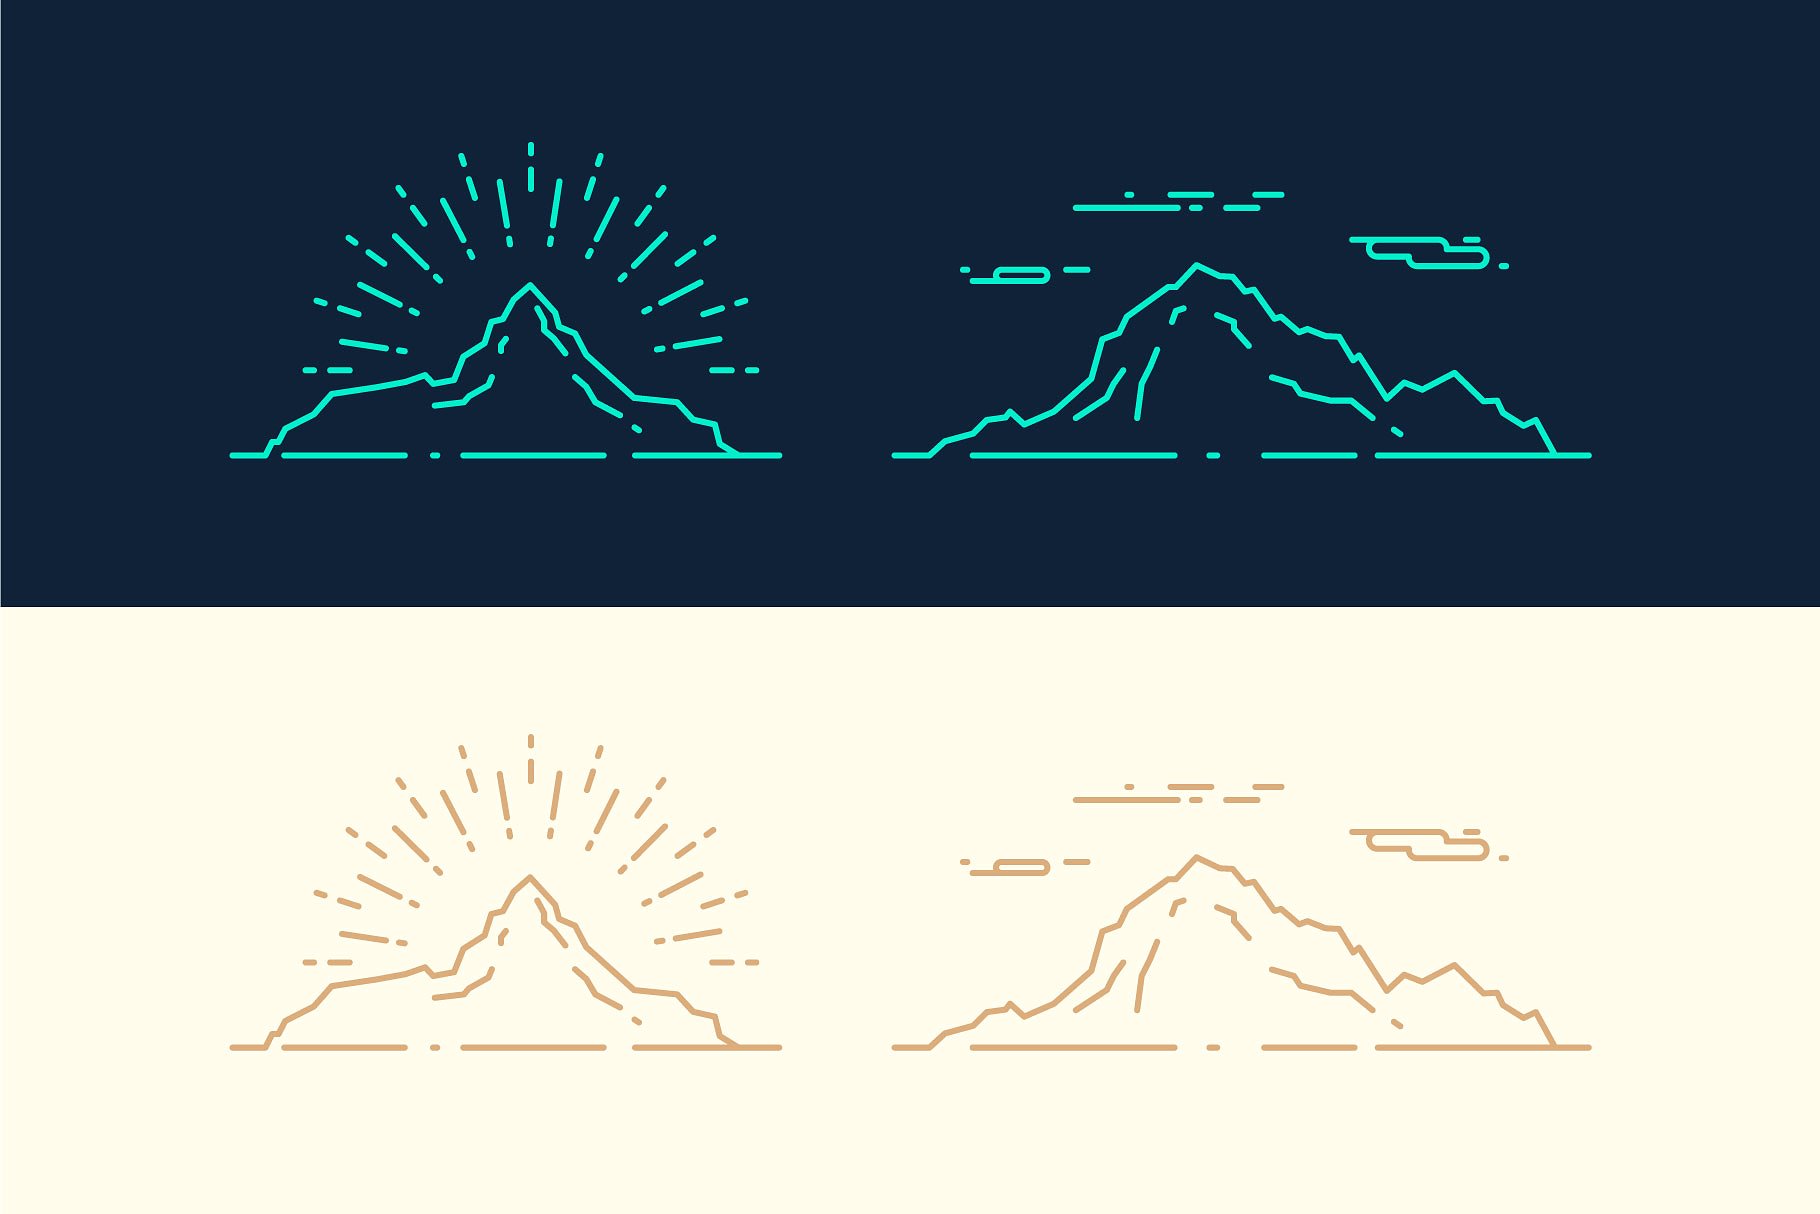 山脉线条图形插画 Set of linear mountains ranges插图(1)